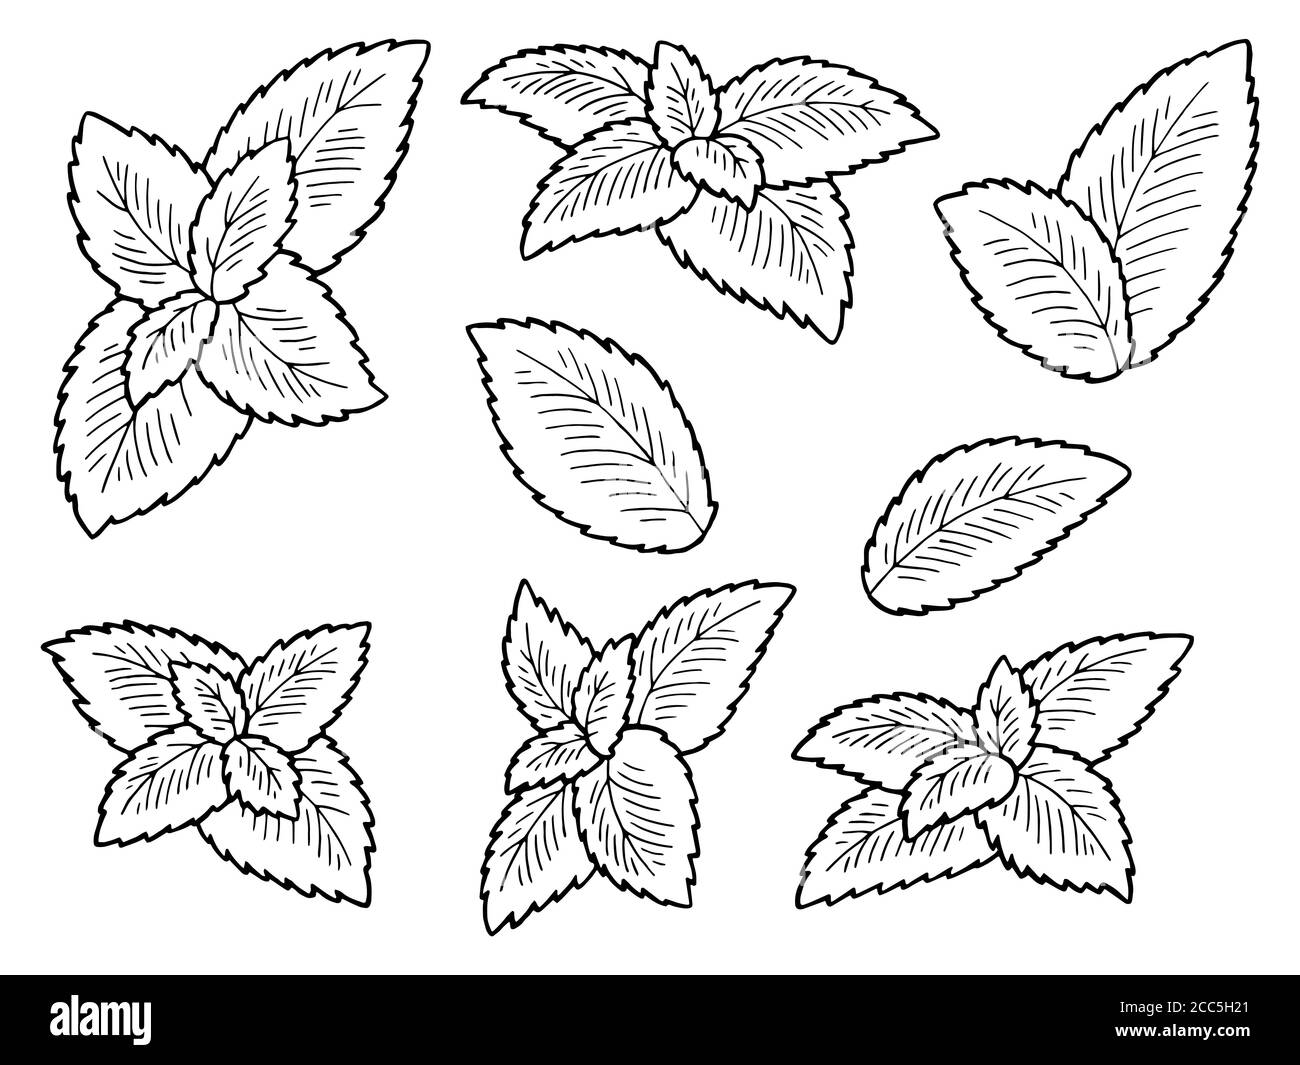 Mint Pflanze Grafik schwarz weiß isoliert Skizze Illustration Vektor Stock Vektor